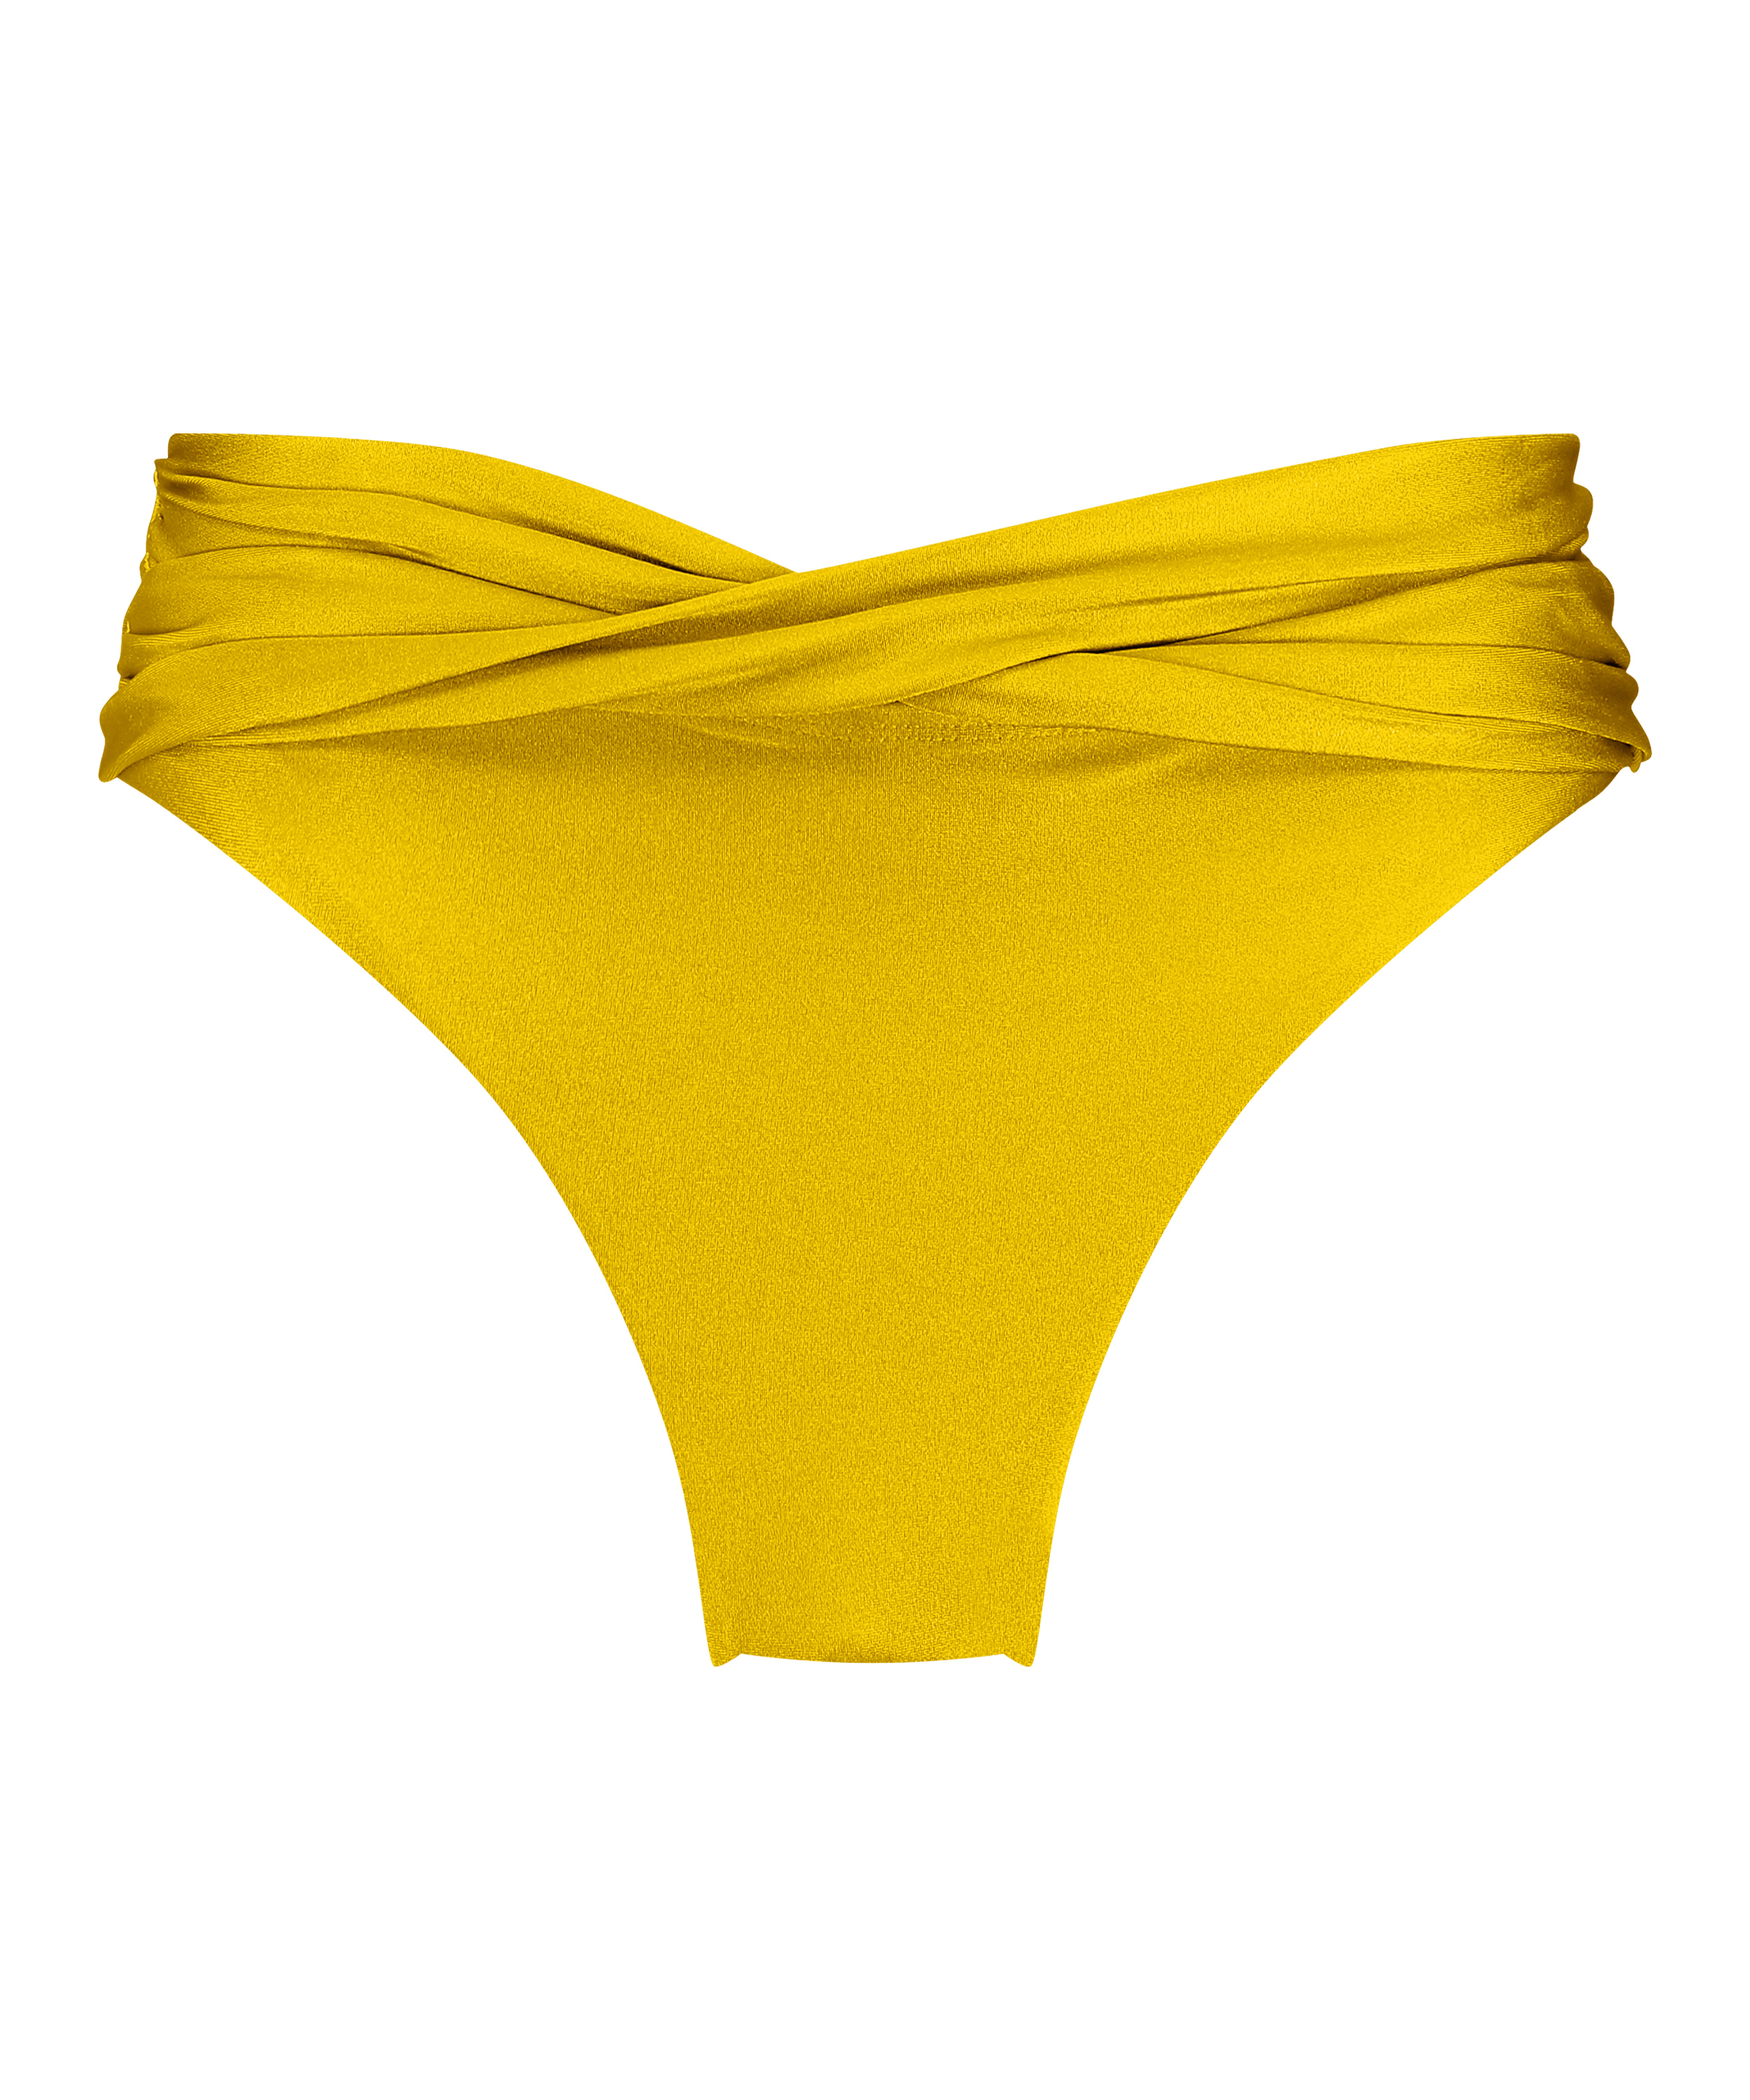 Majtki Bikini Rio Nice, Żółty, main